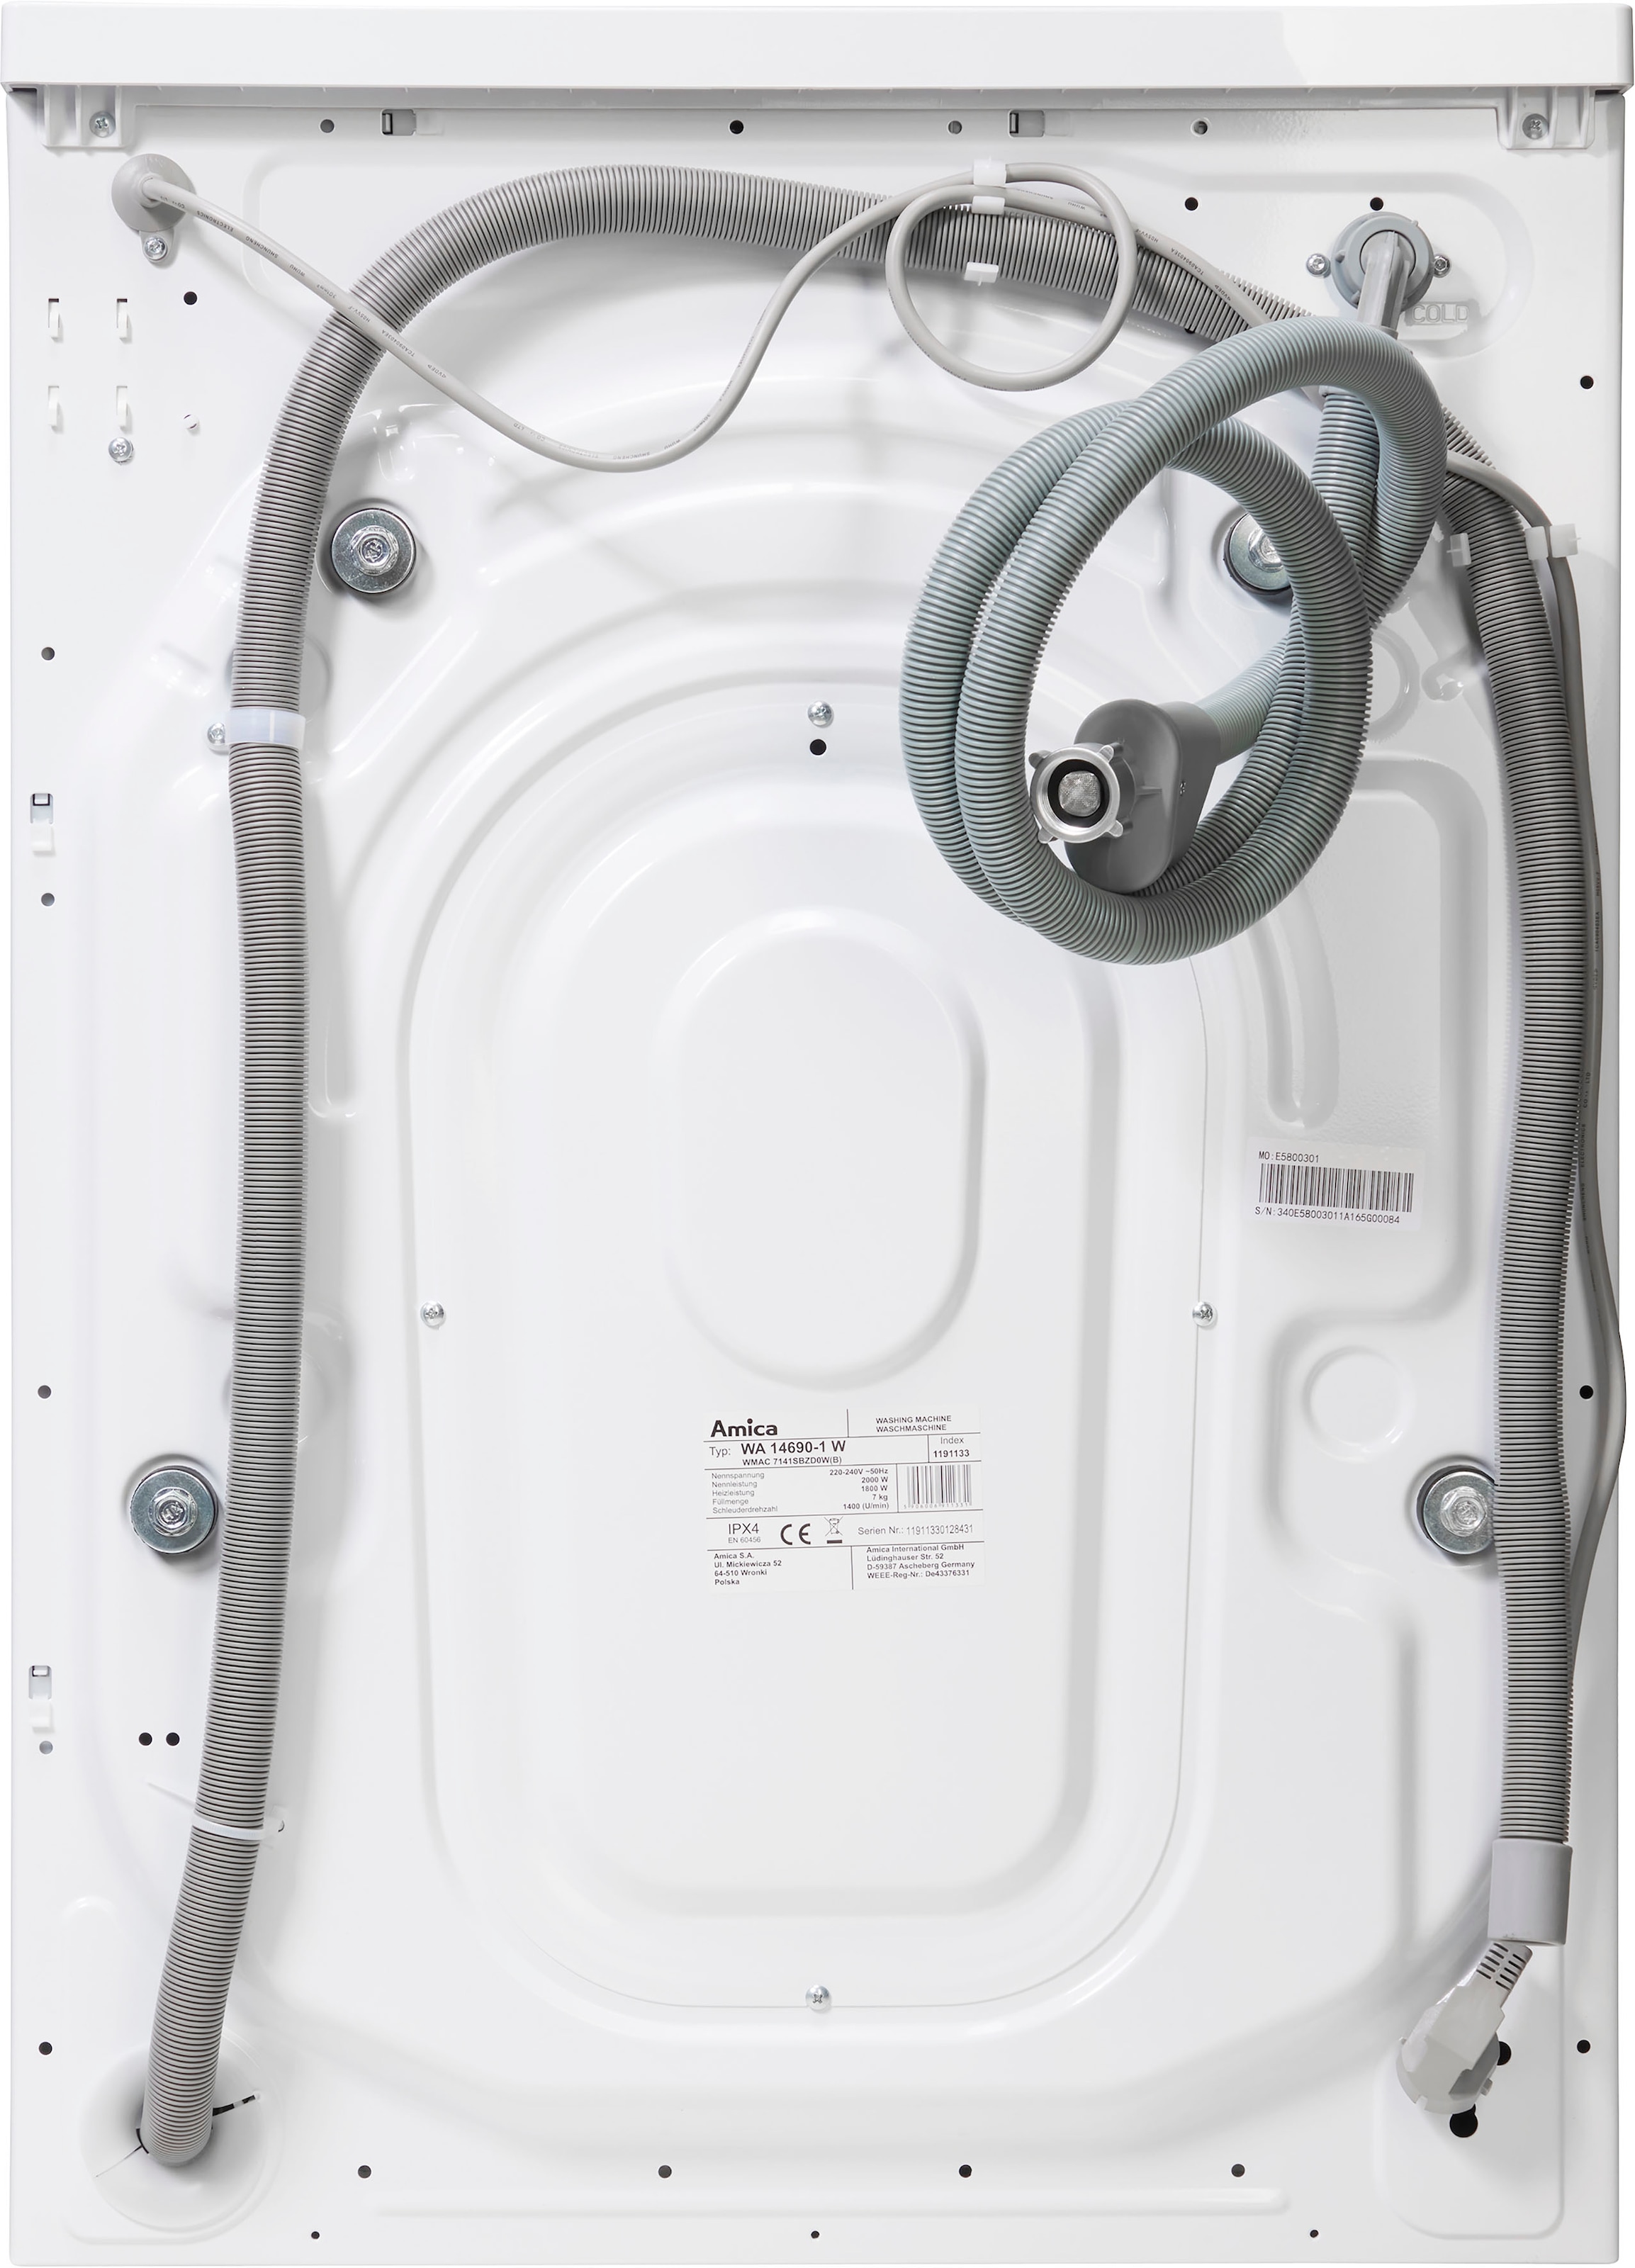 WA 14690-1 14690-1 »WA bestellen kg, Waschmaschine U/min 7 Amica W, 1400 W«, online